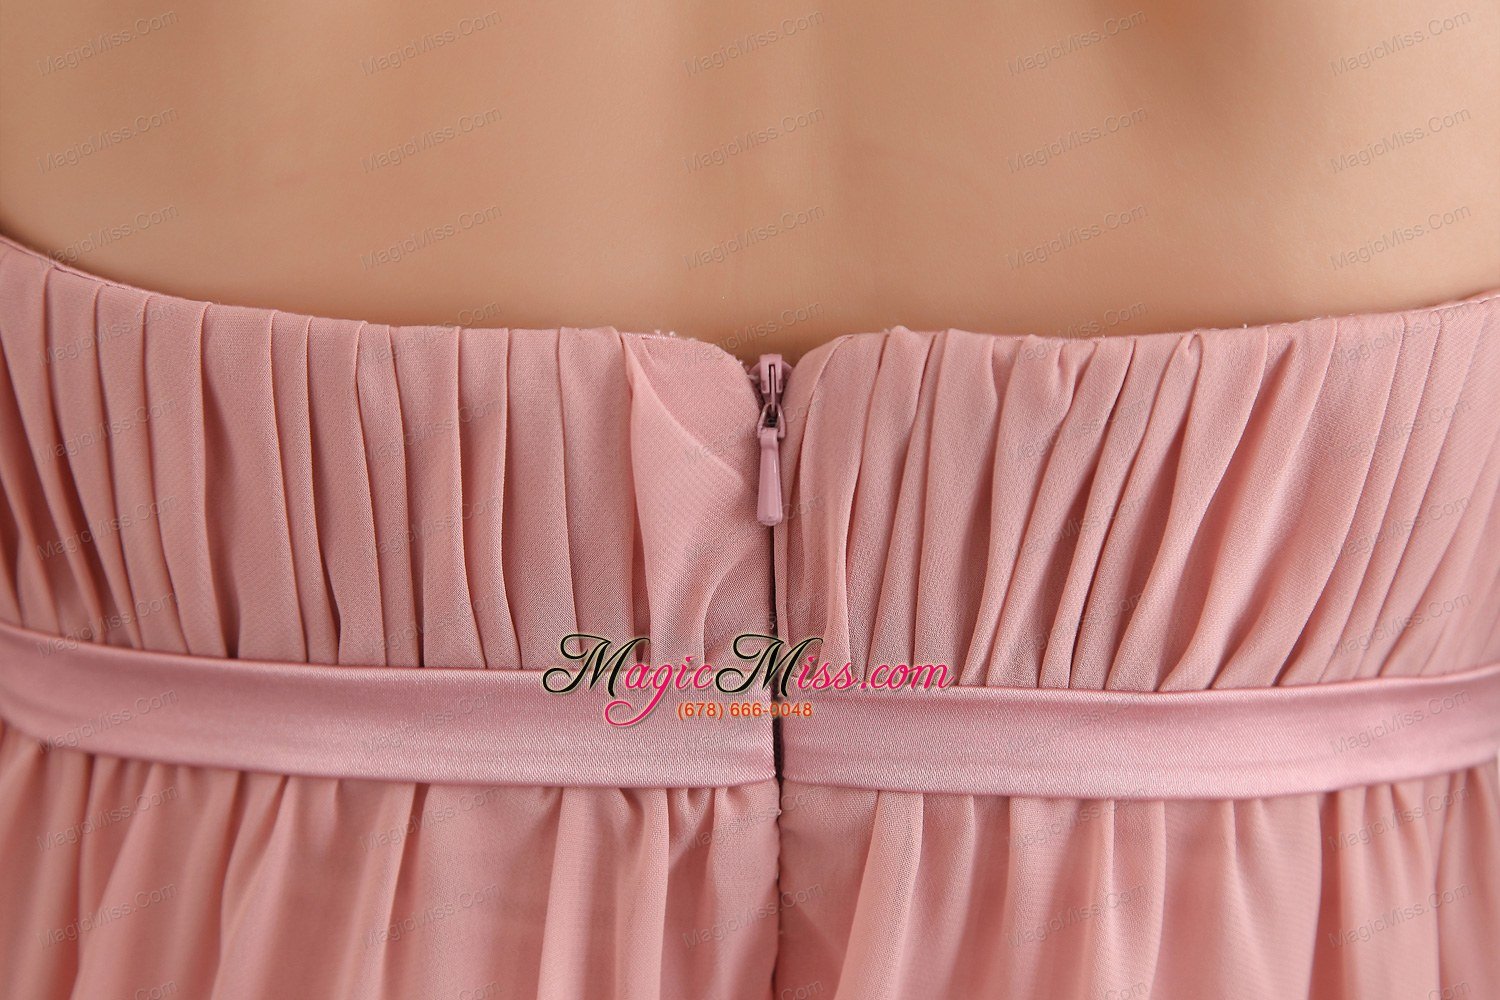 wholesale pink column strapless court train chiffon beading prom dress